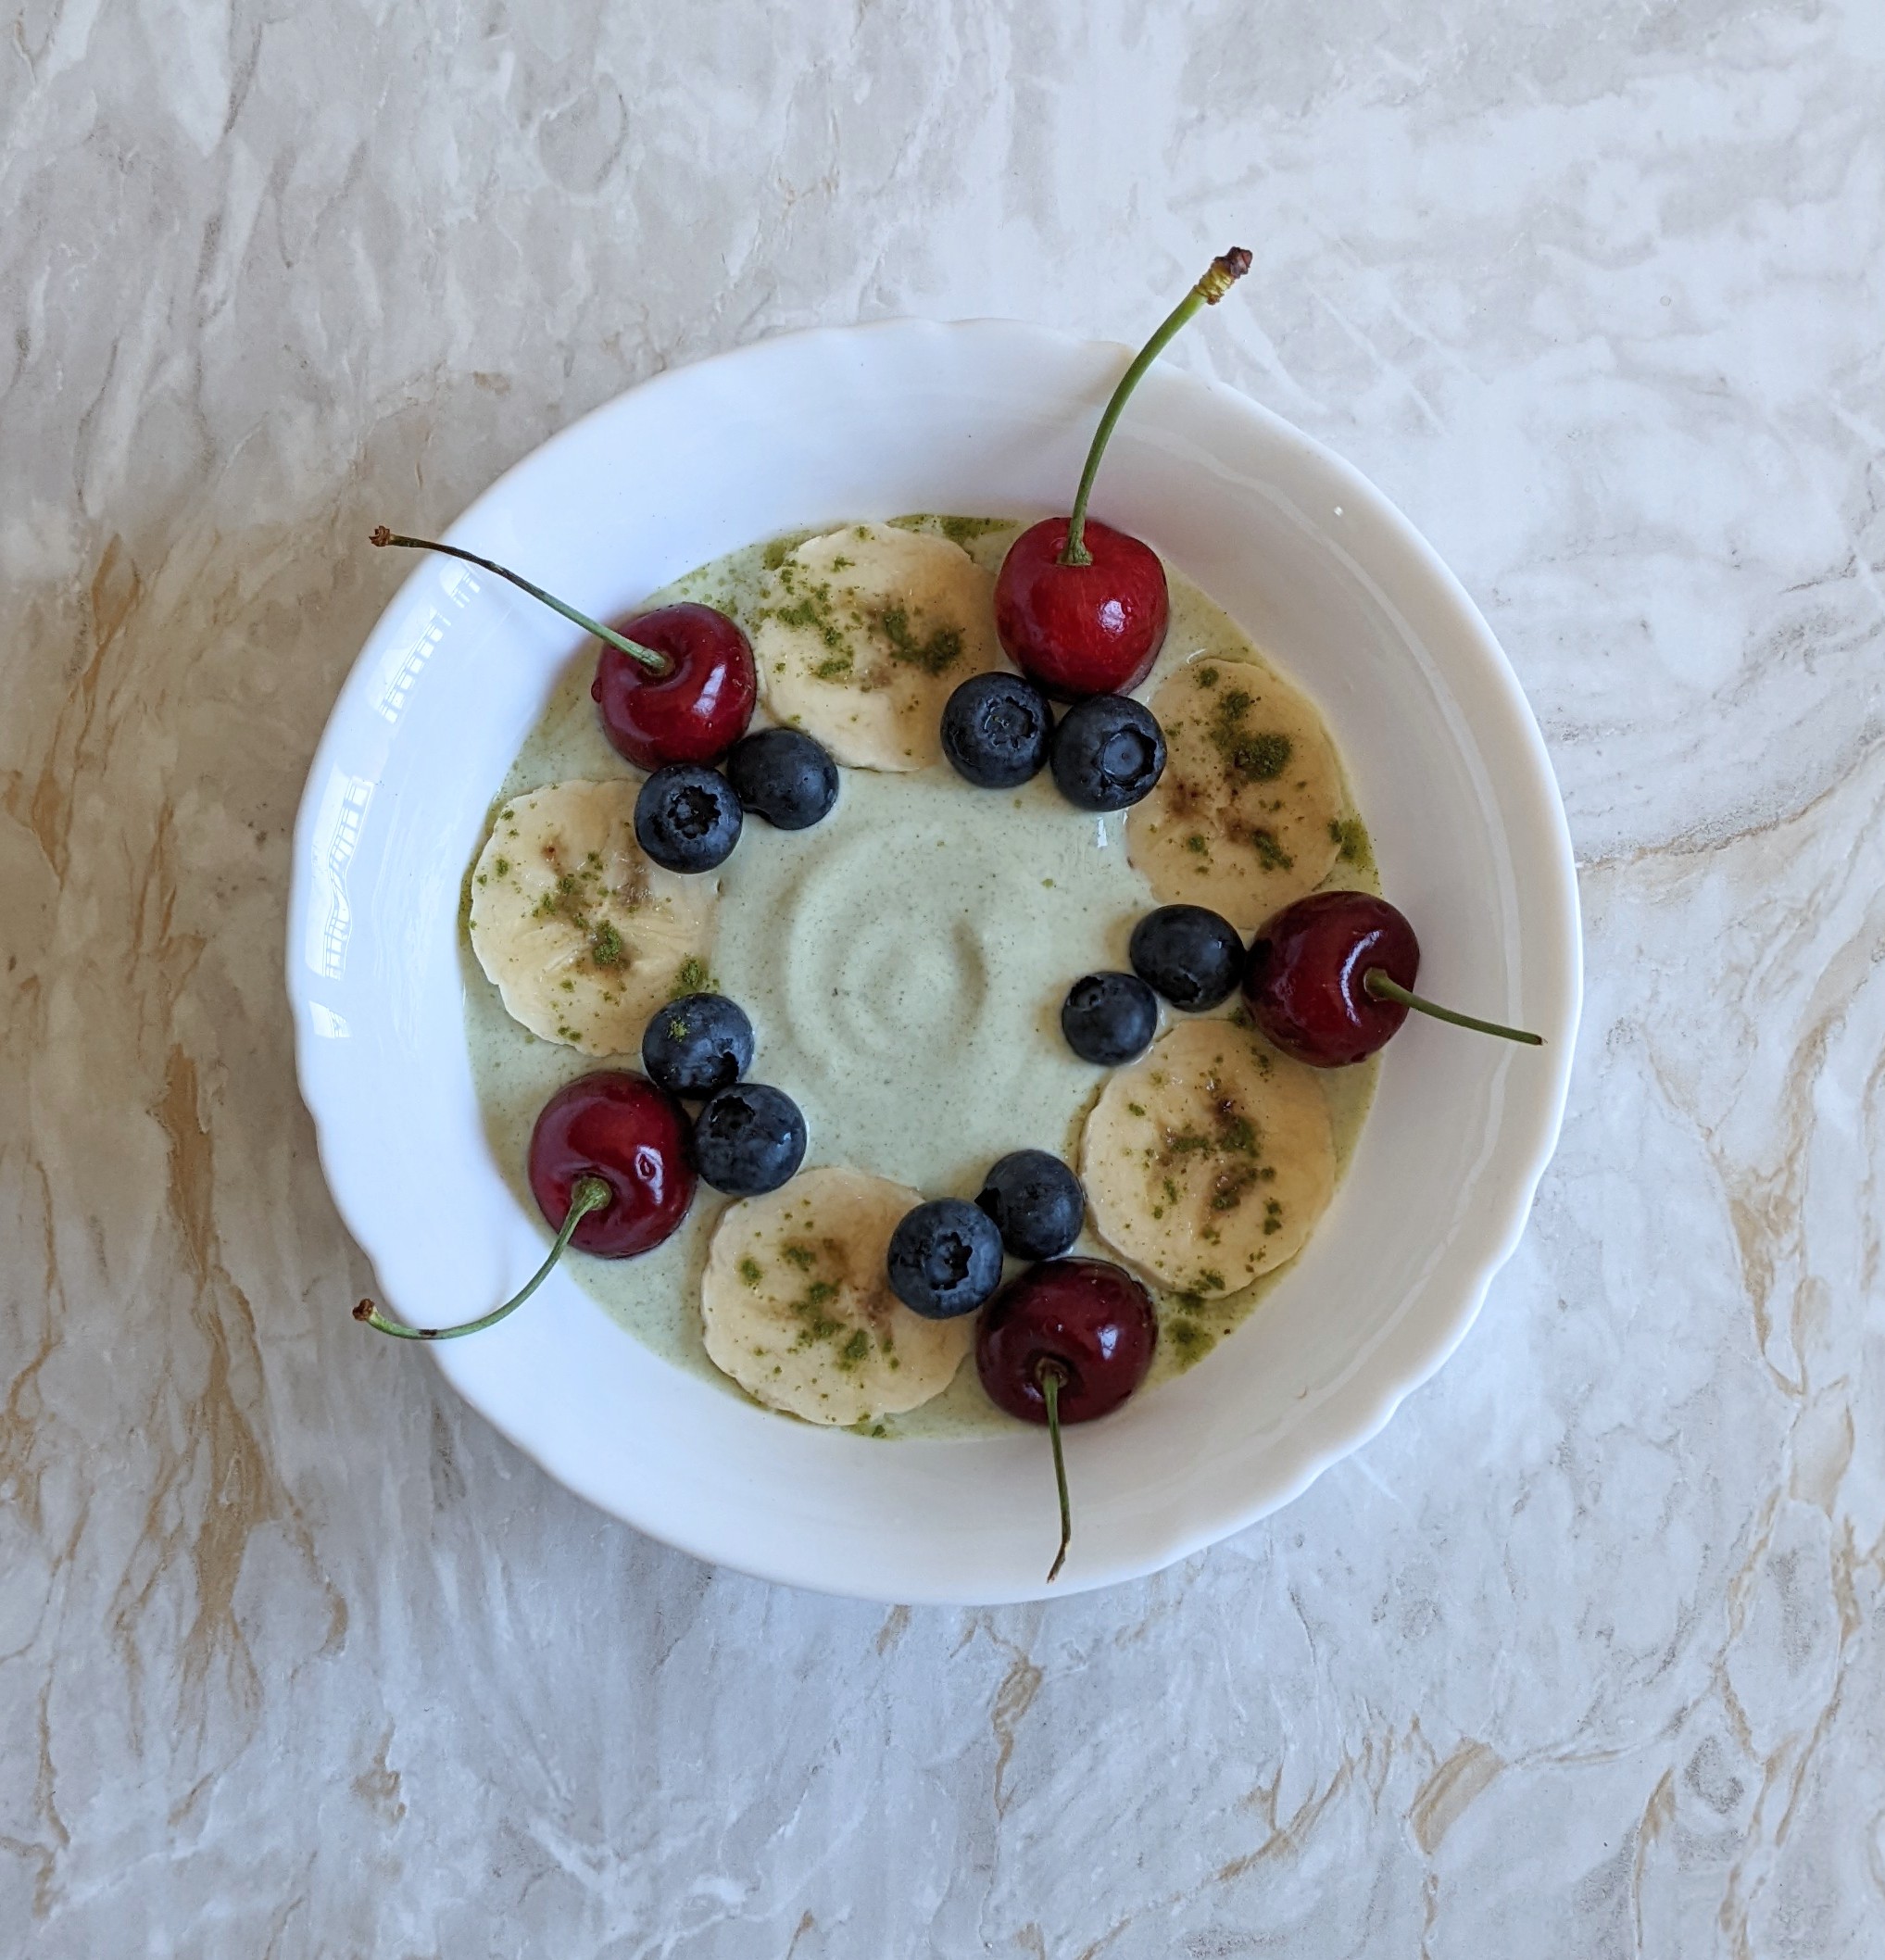 moringa-lemon-yoghurt-bowl-with-banana-blueberries-and-cherries-refreshing-summer-breakfast-healthy-protein-packed-desserts